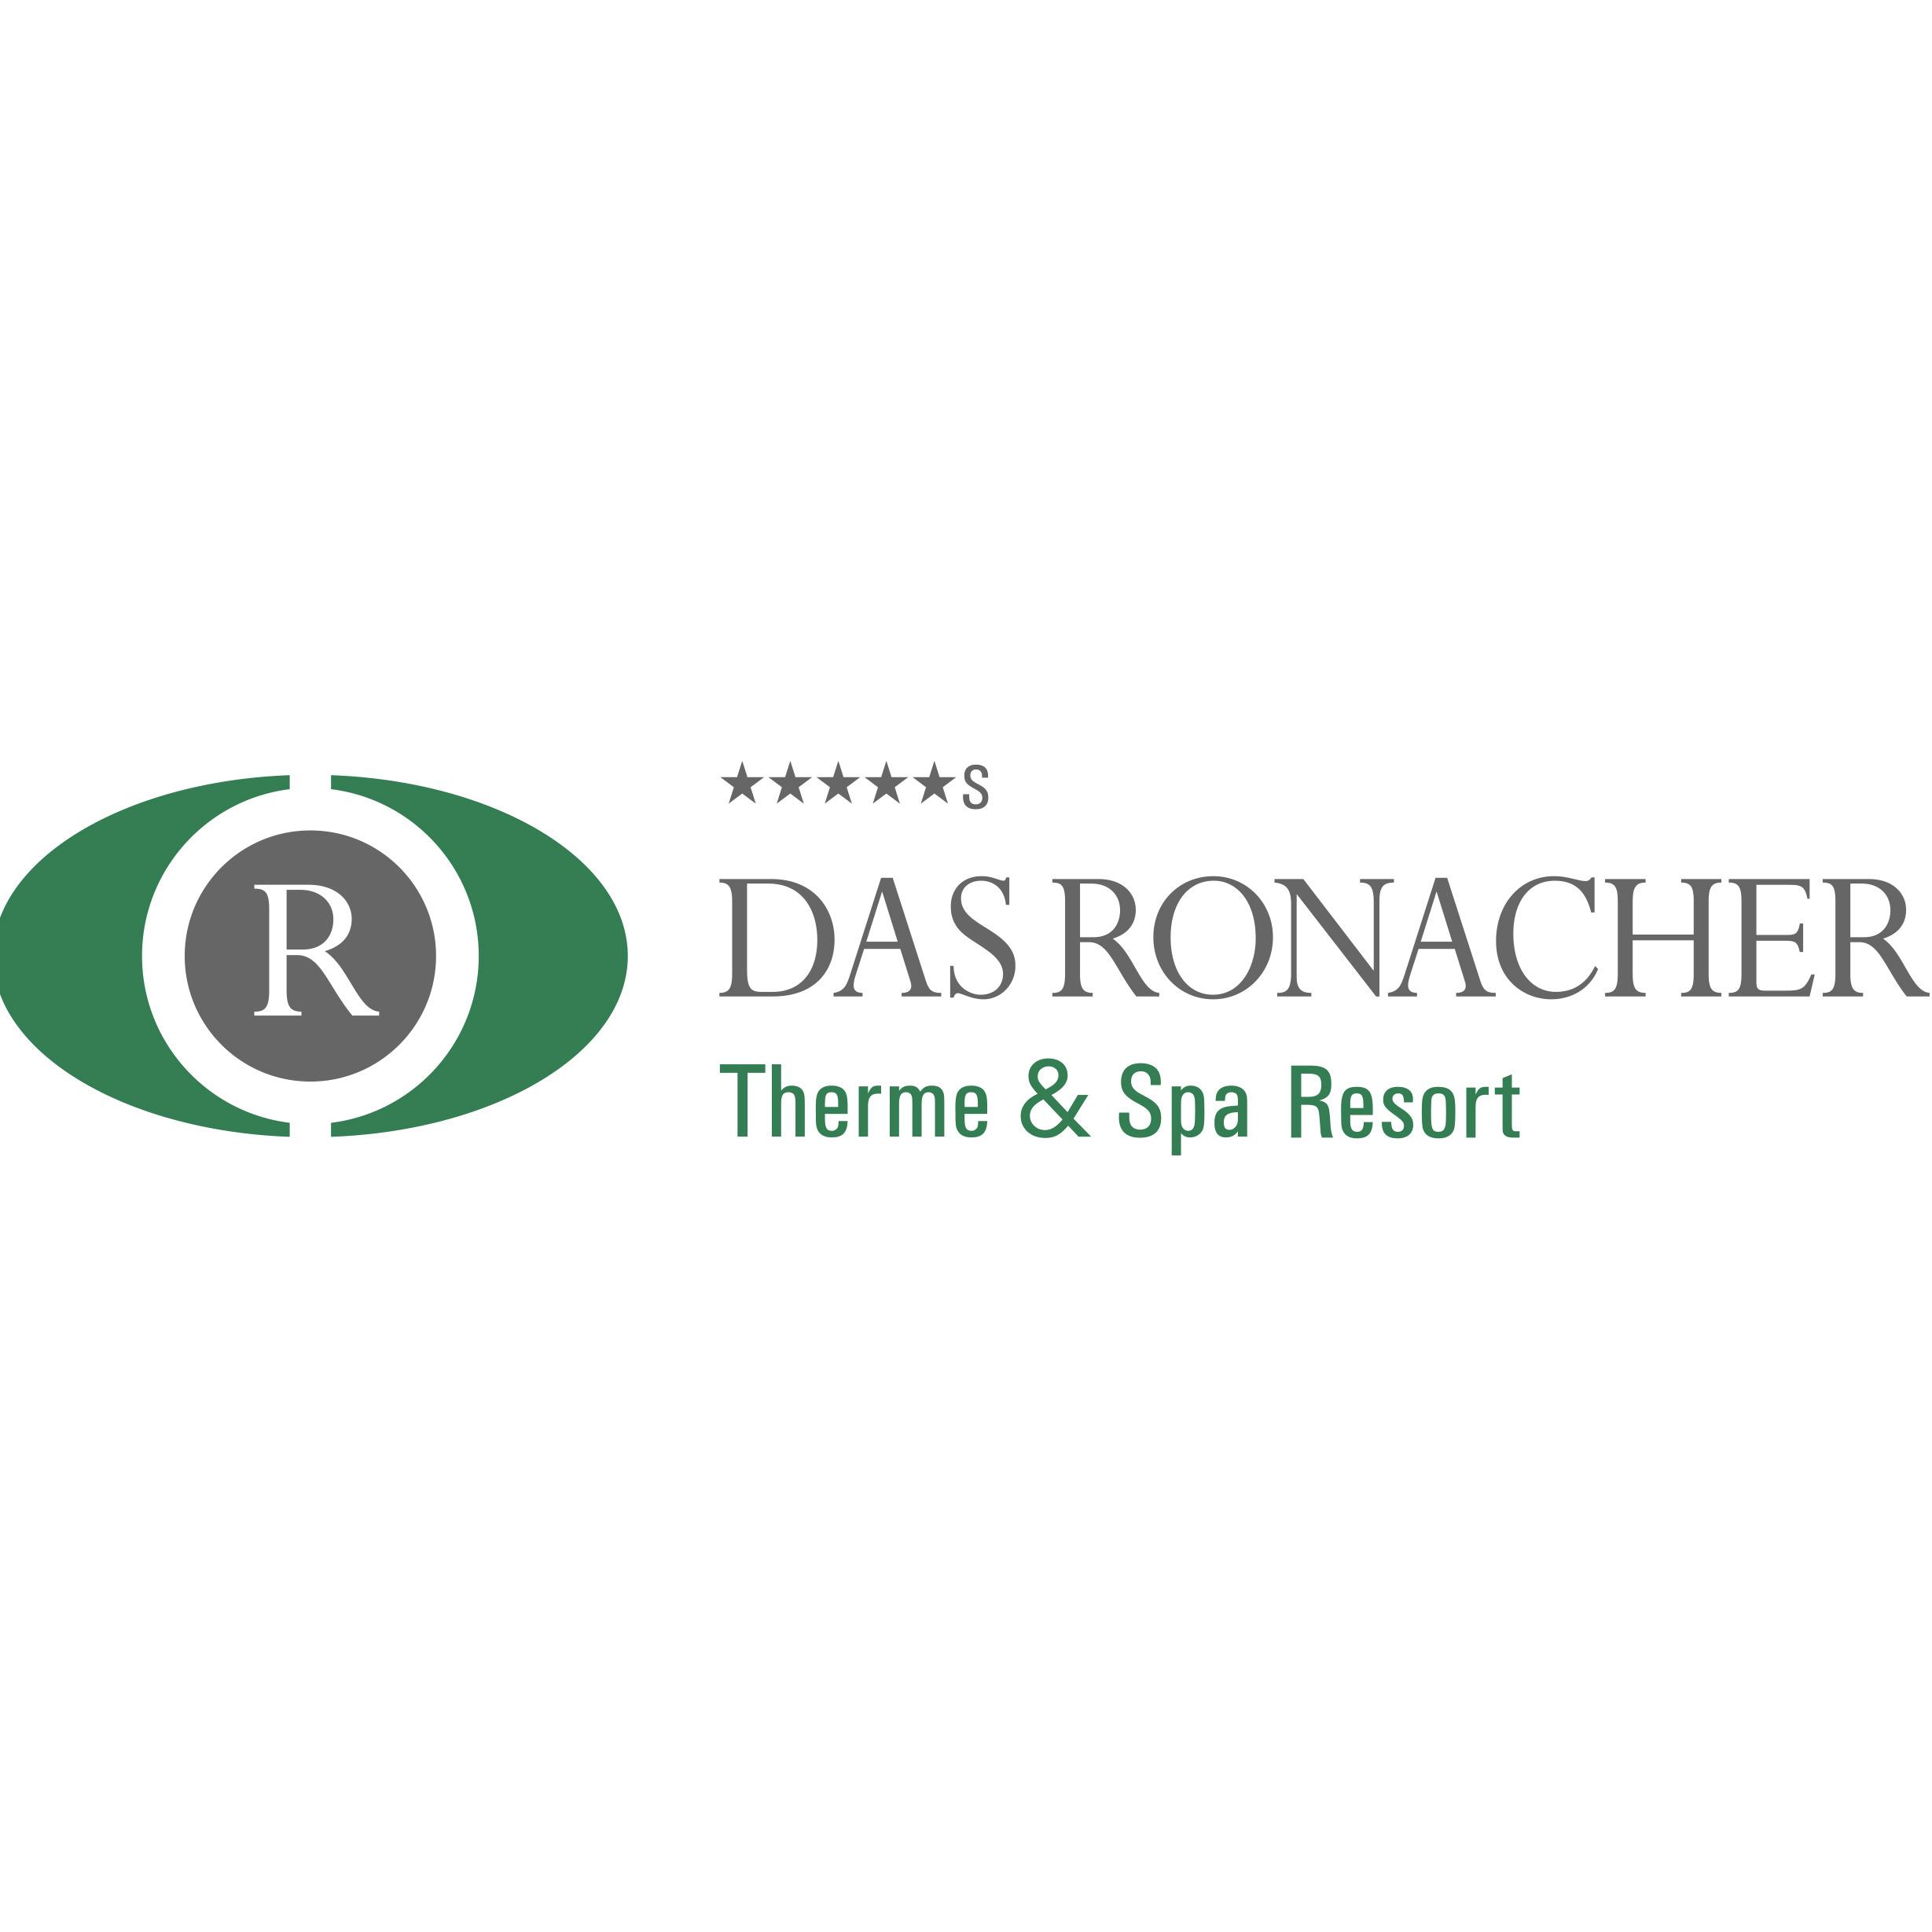 DAS RONACHER Therme & Spa Resort, Familie Ronacher GmbH Logo